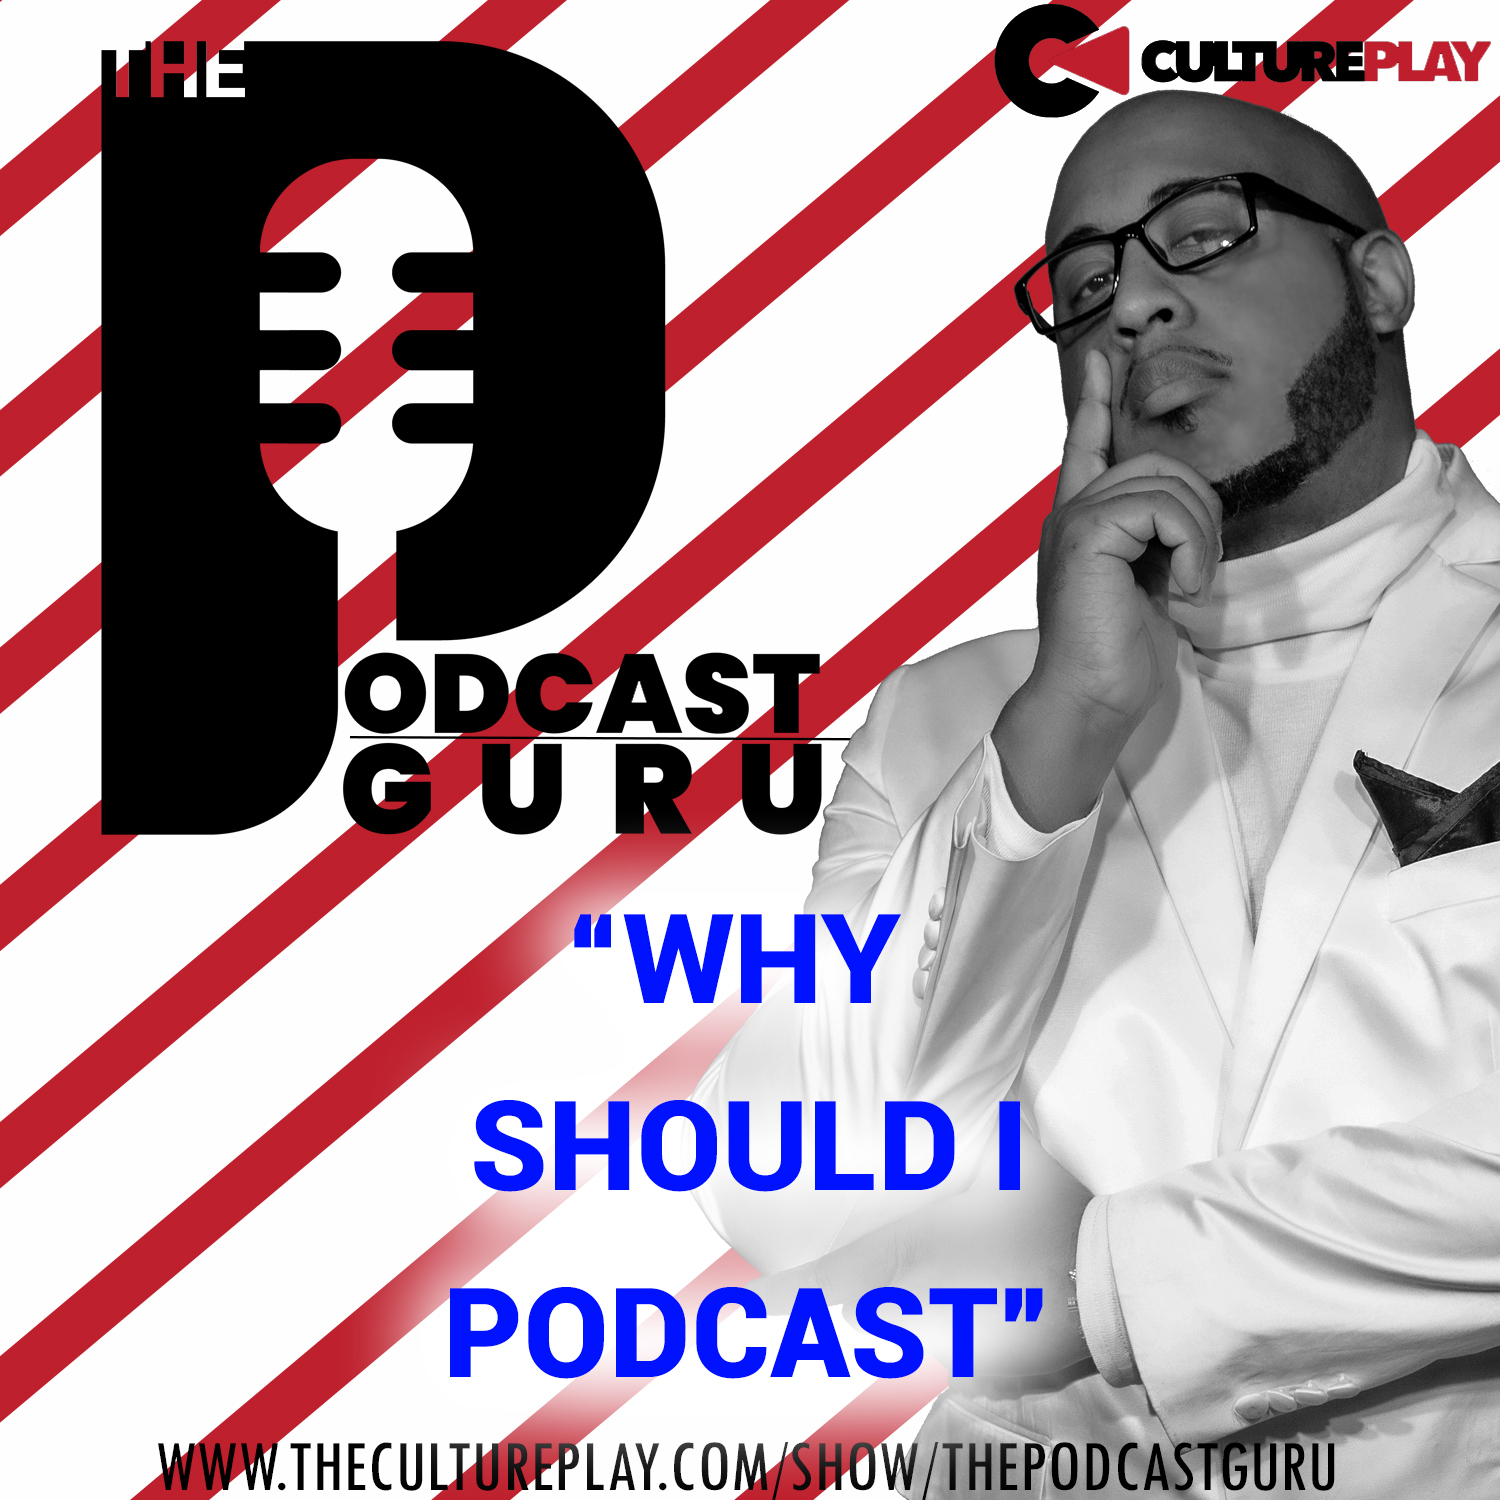 Podcast Guru - Why Should I Podcast